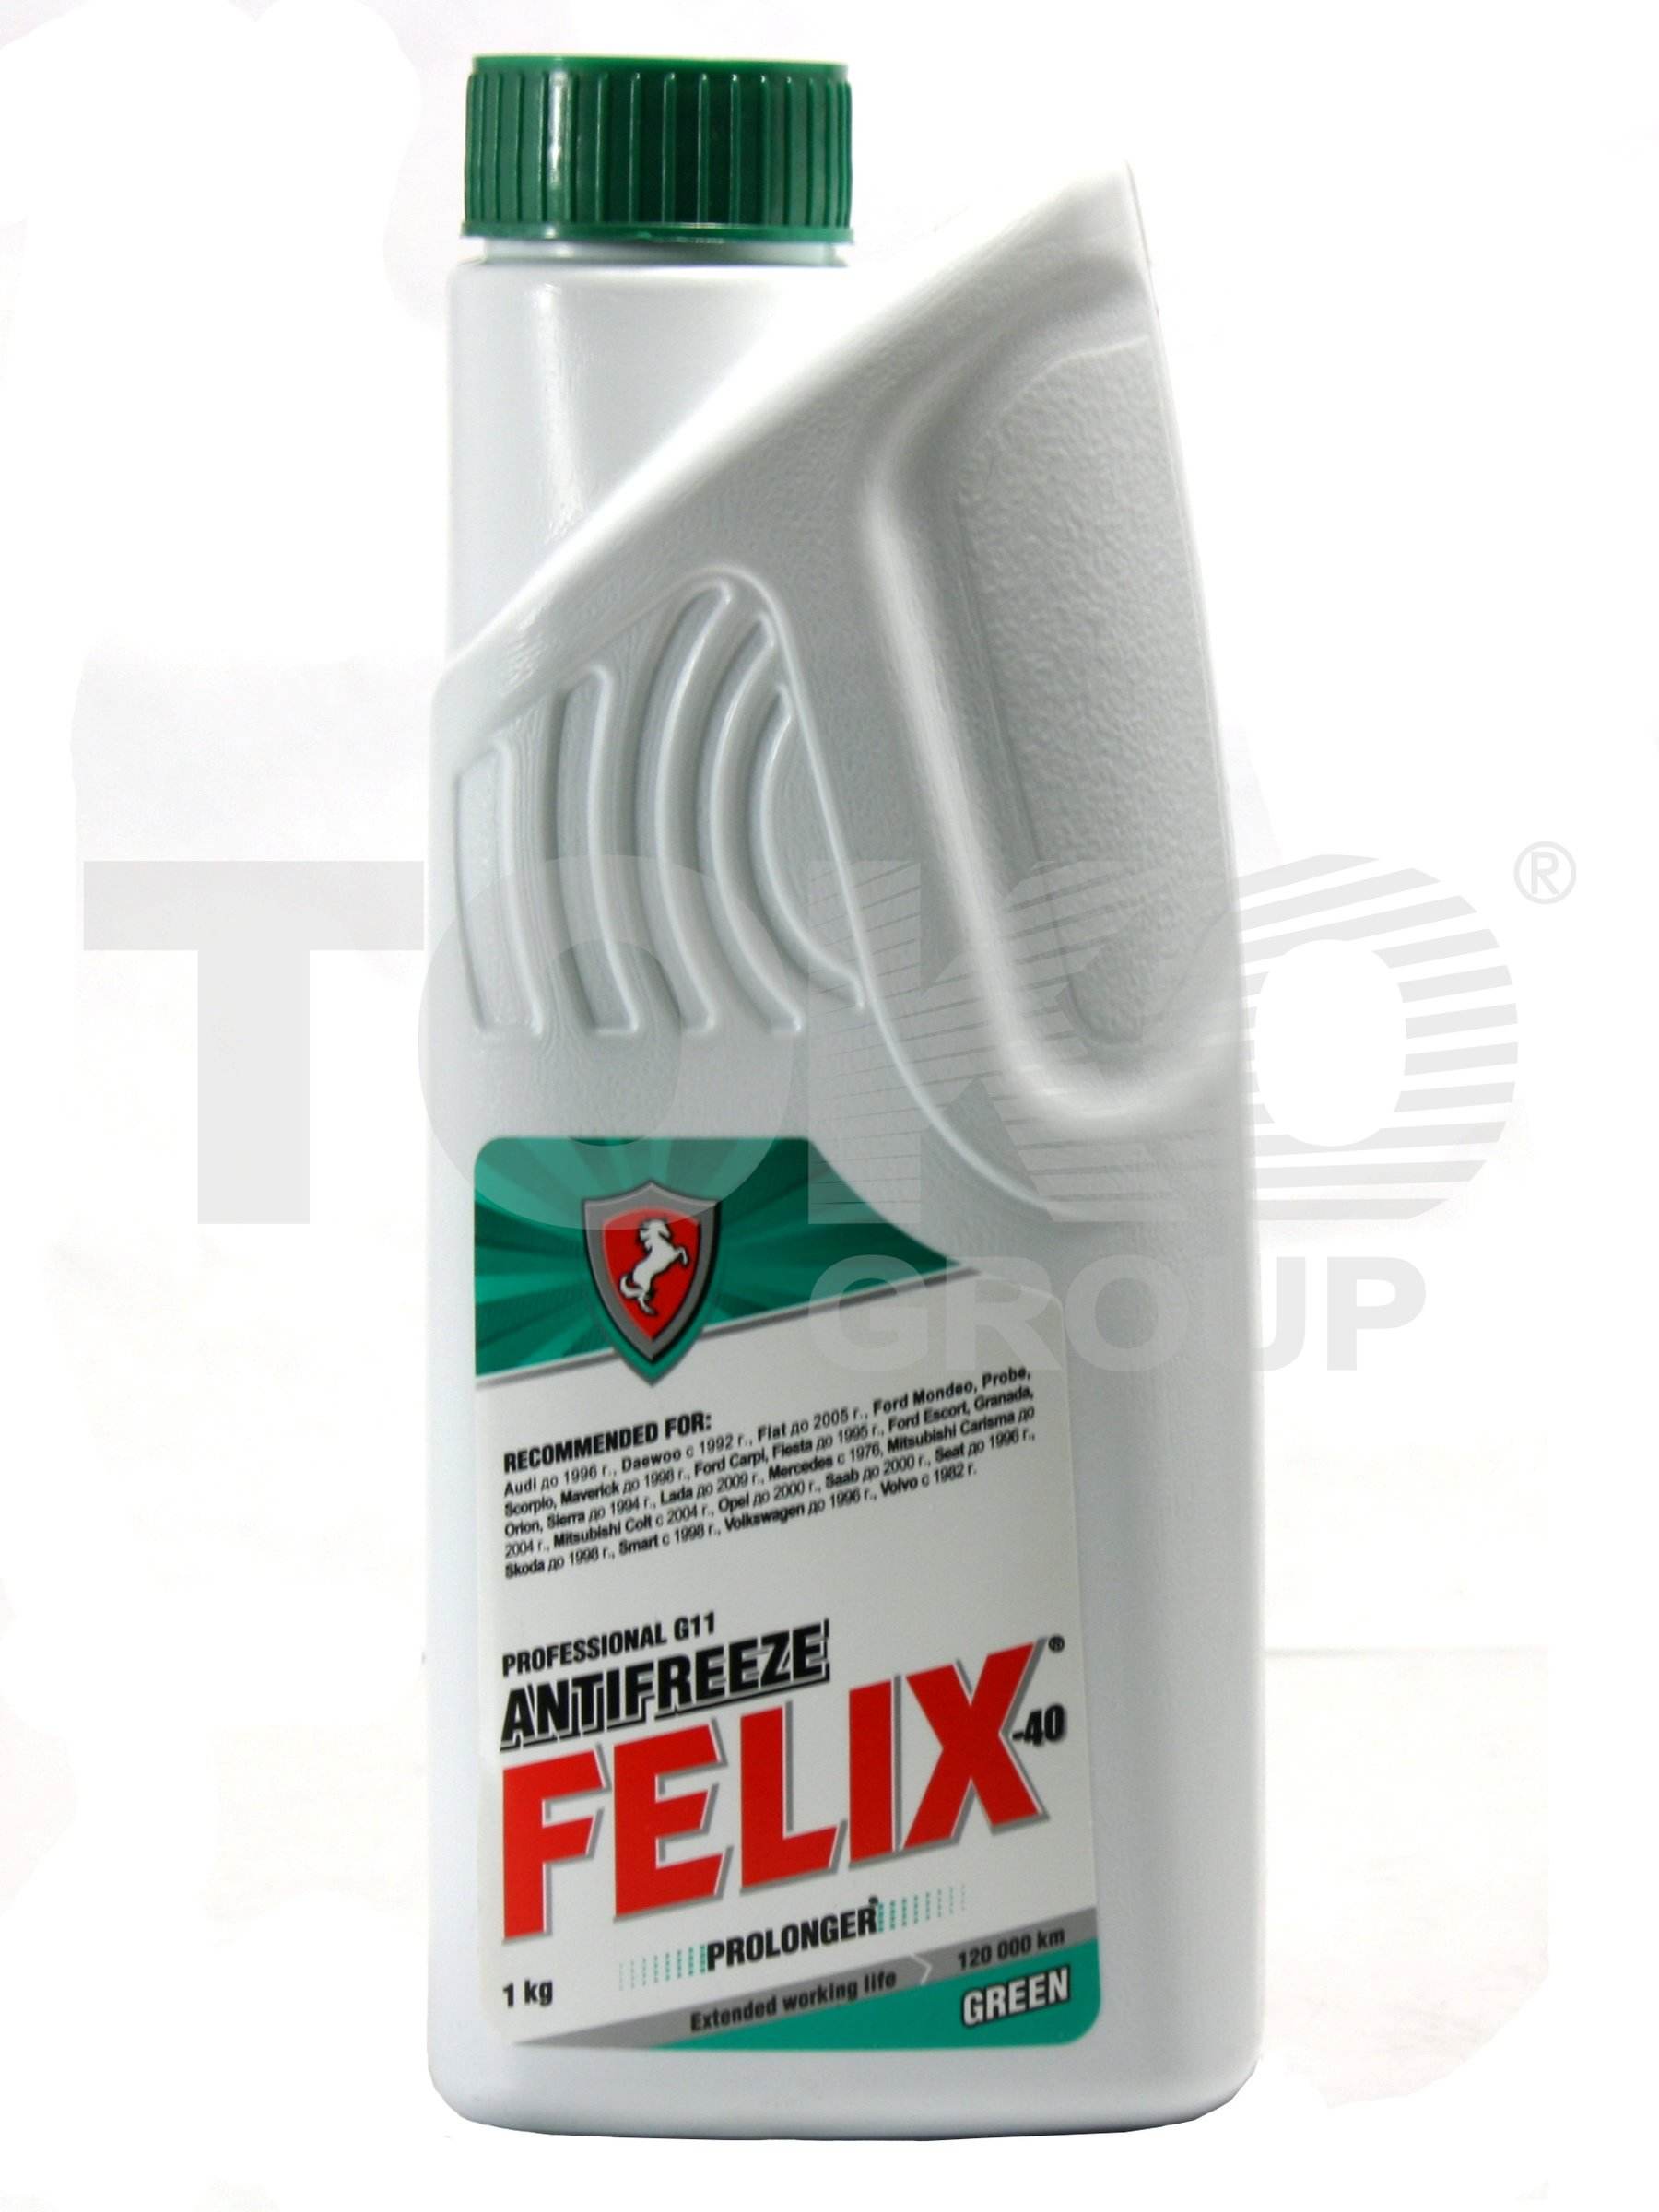 Анитифриз FELIX FELIX Green Prolonger Antifreeze 1kg - Фото #1